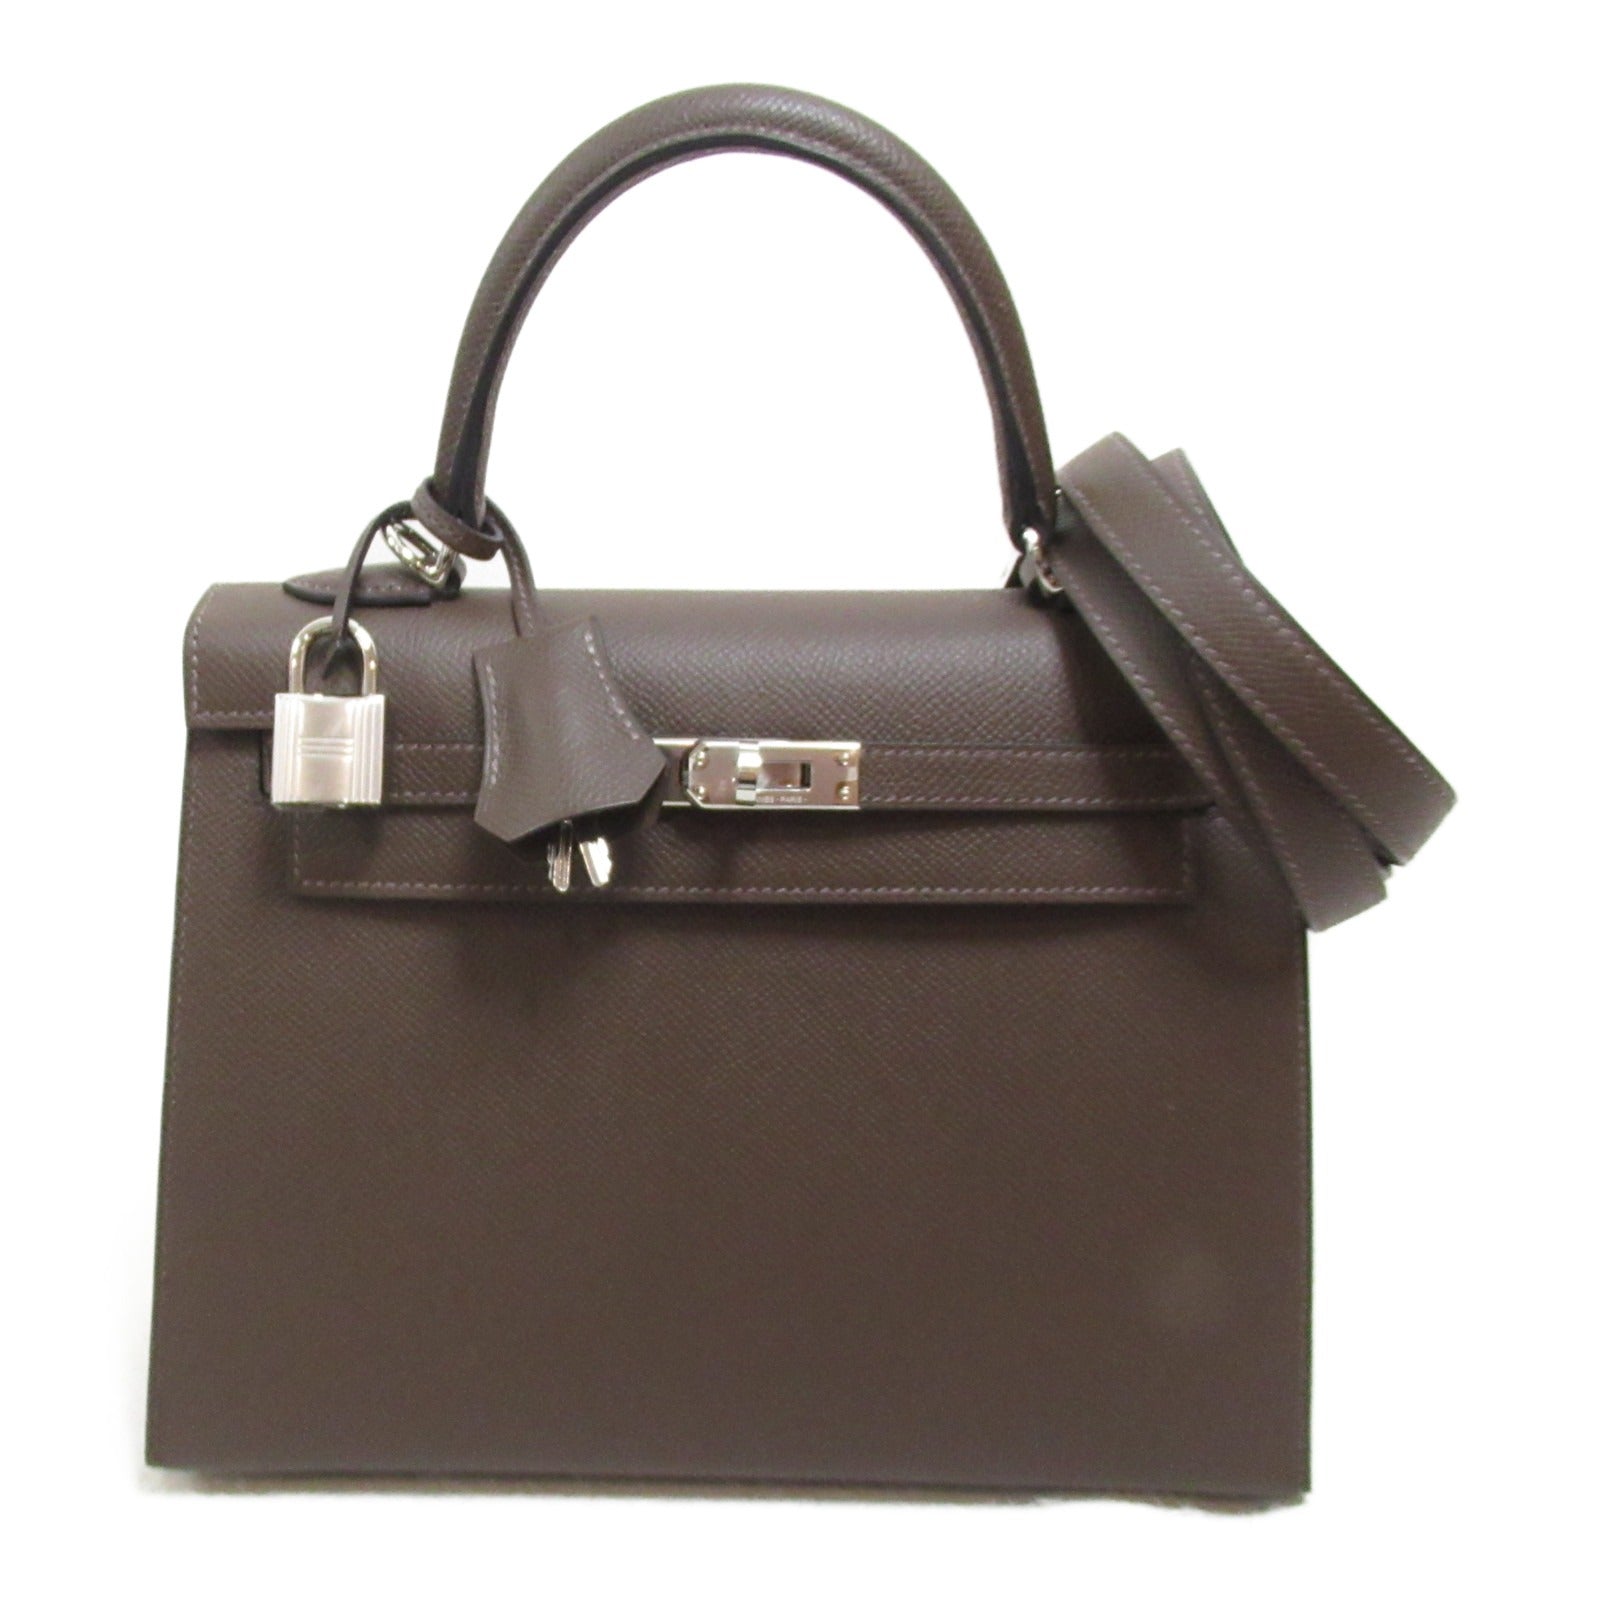 Hermes Kelly 25 Ecolise Handbag Outdoor Sewing Handbag Leather Handbag Epsom  Brown